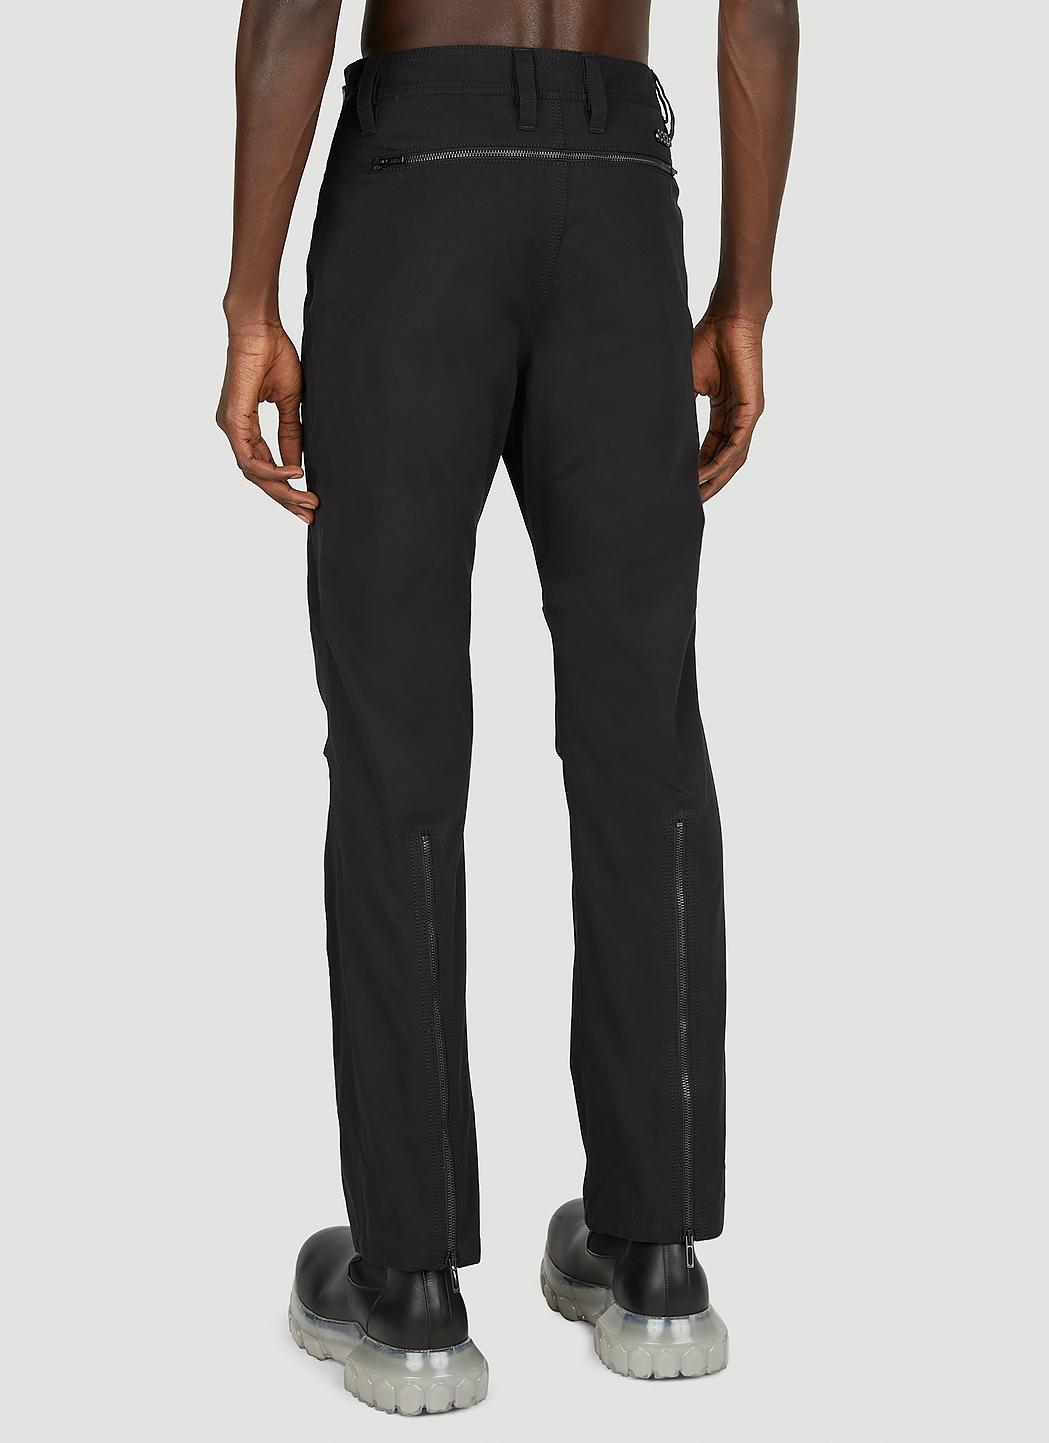 032c Split-s Zip Pants in Black for Men